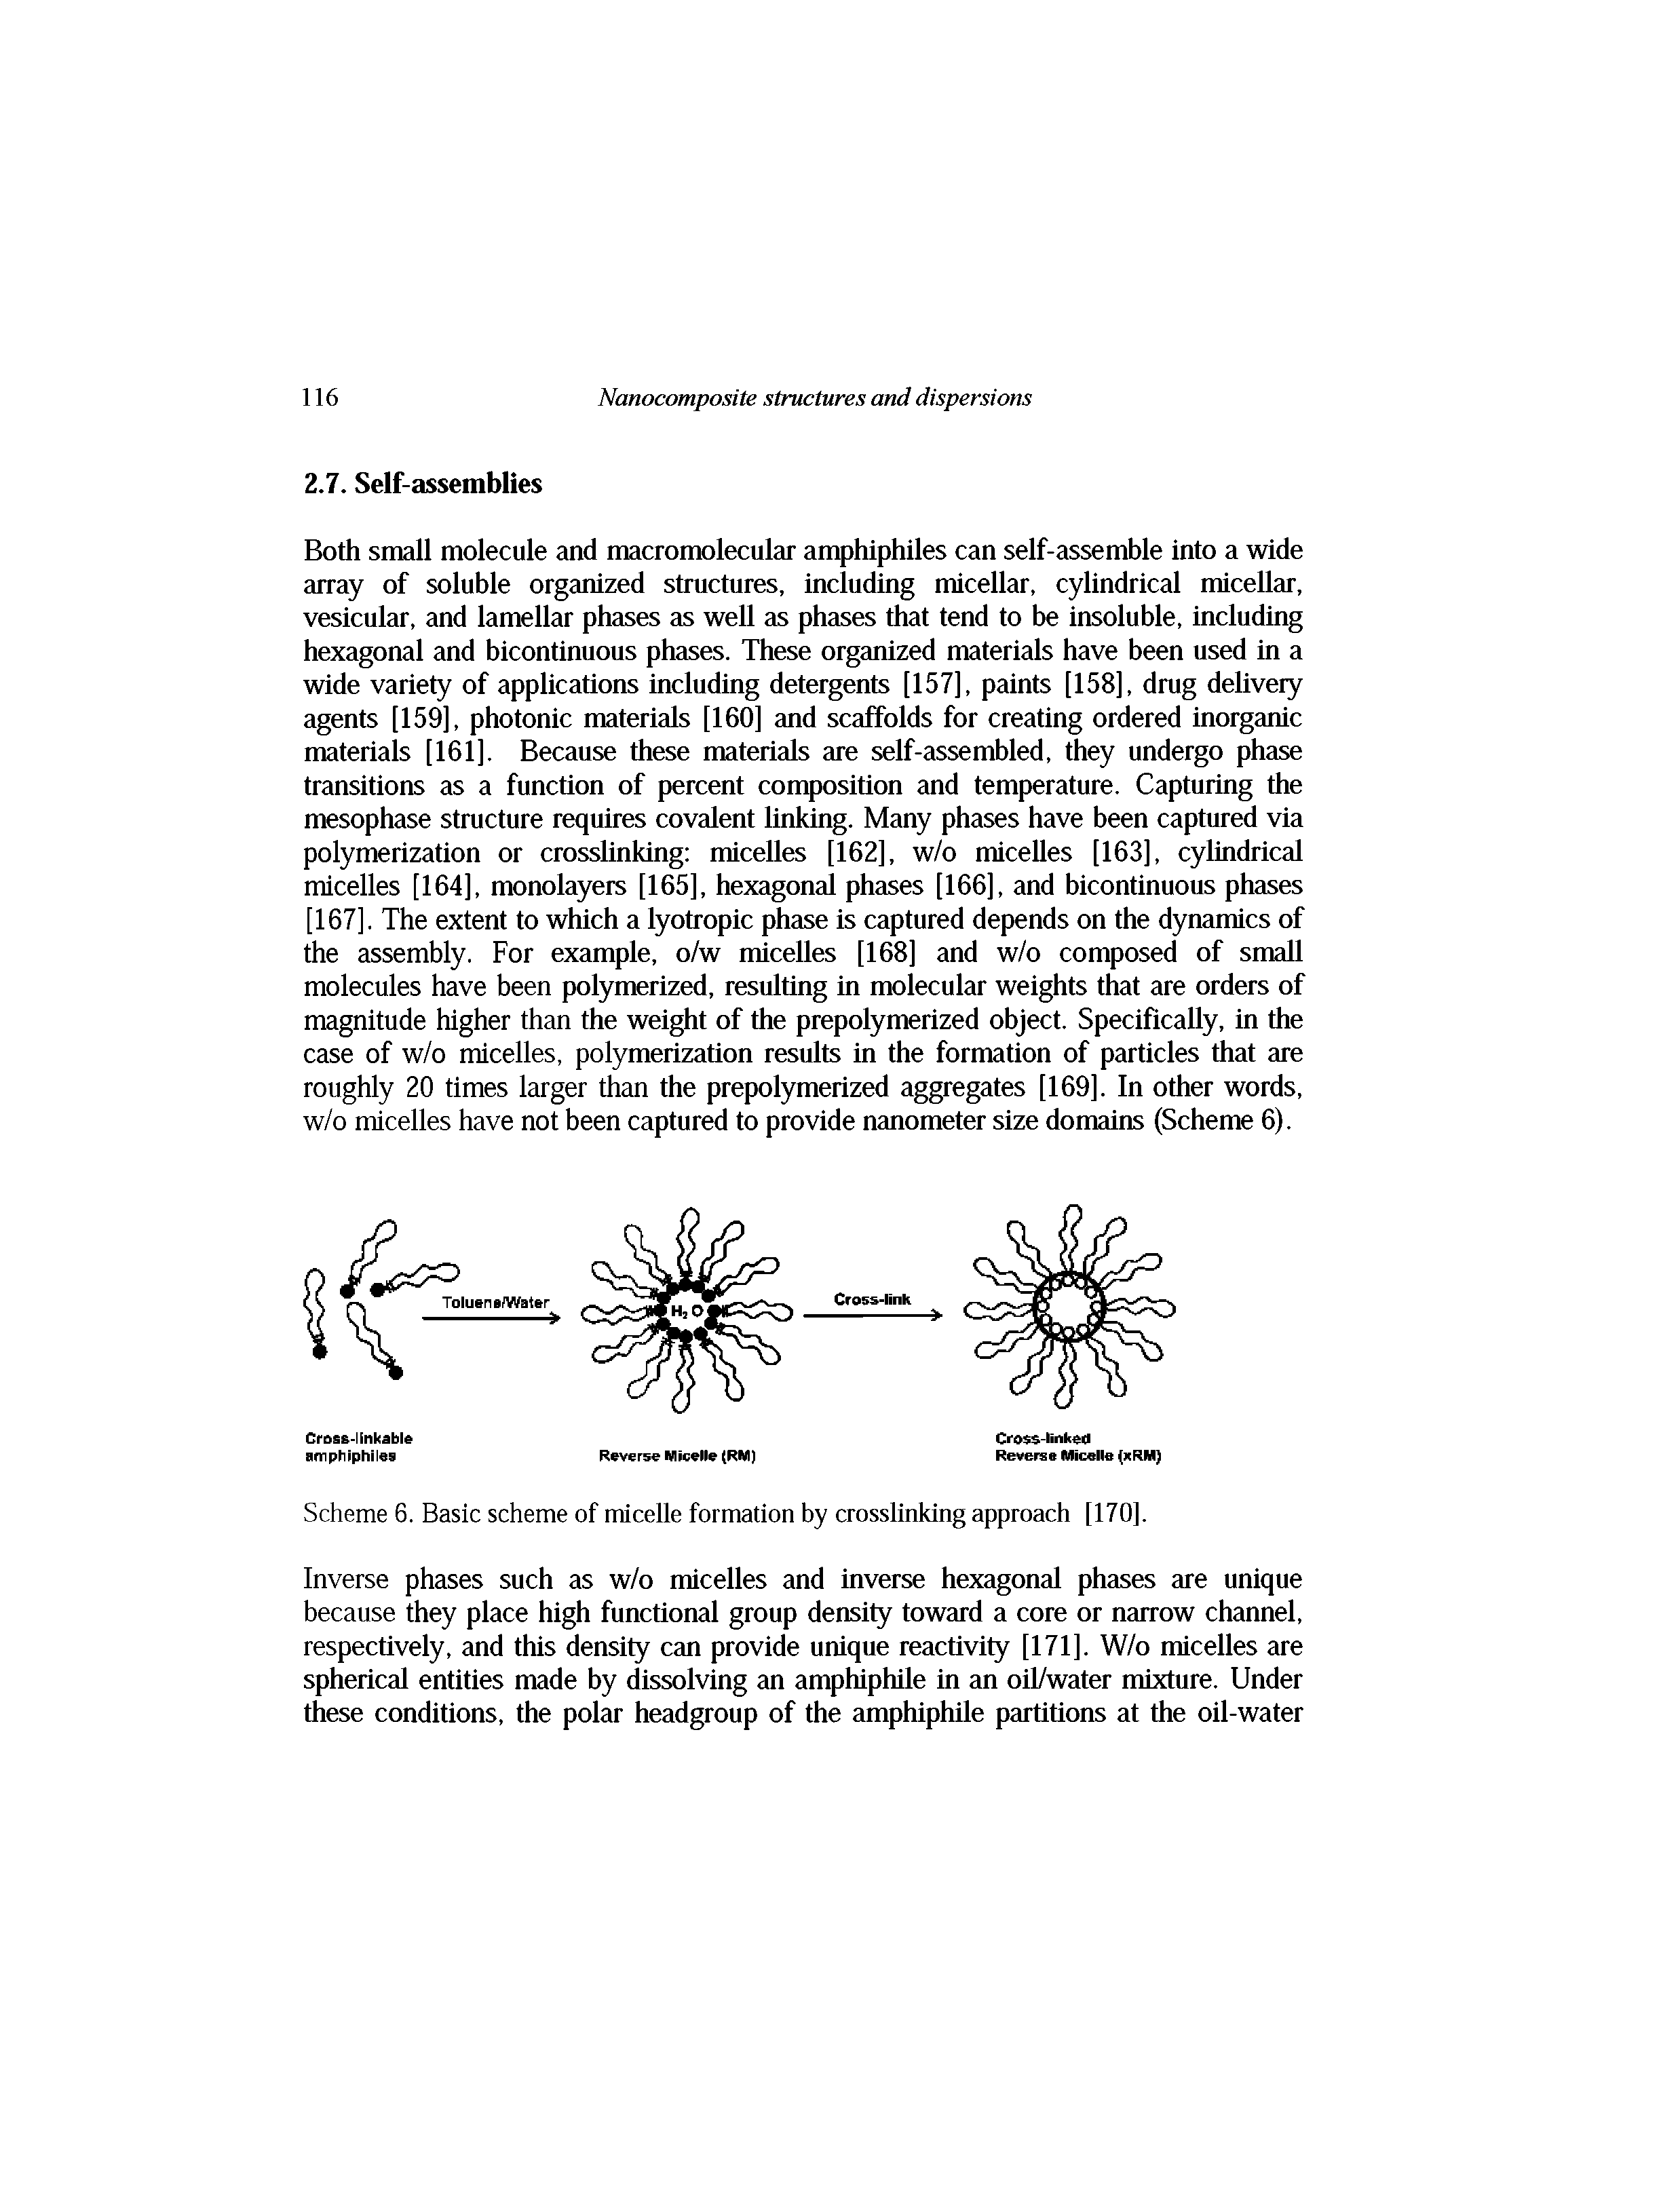 Scheme 6. Basic scheme of micelle formation by crosslinking approach [170].